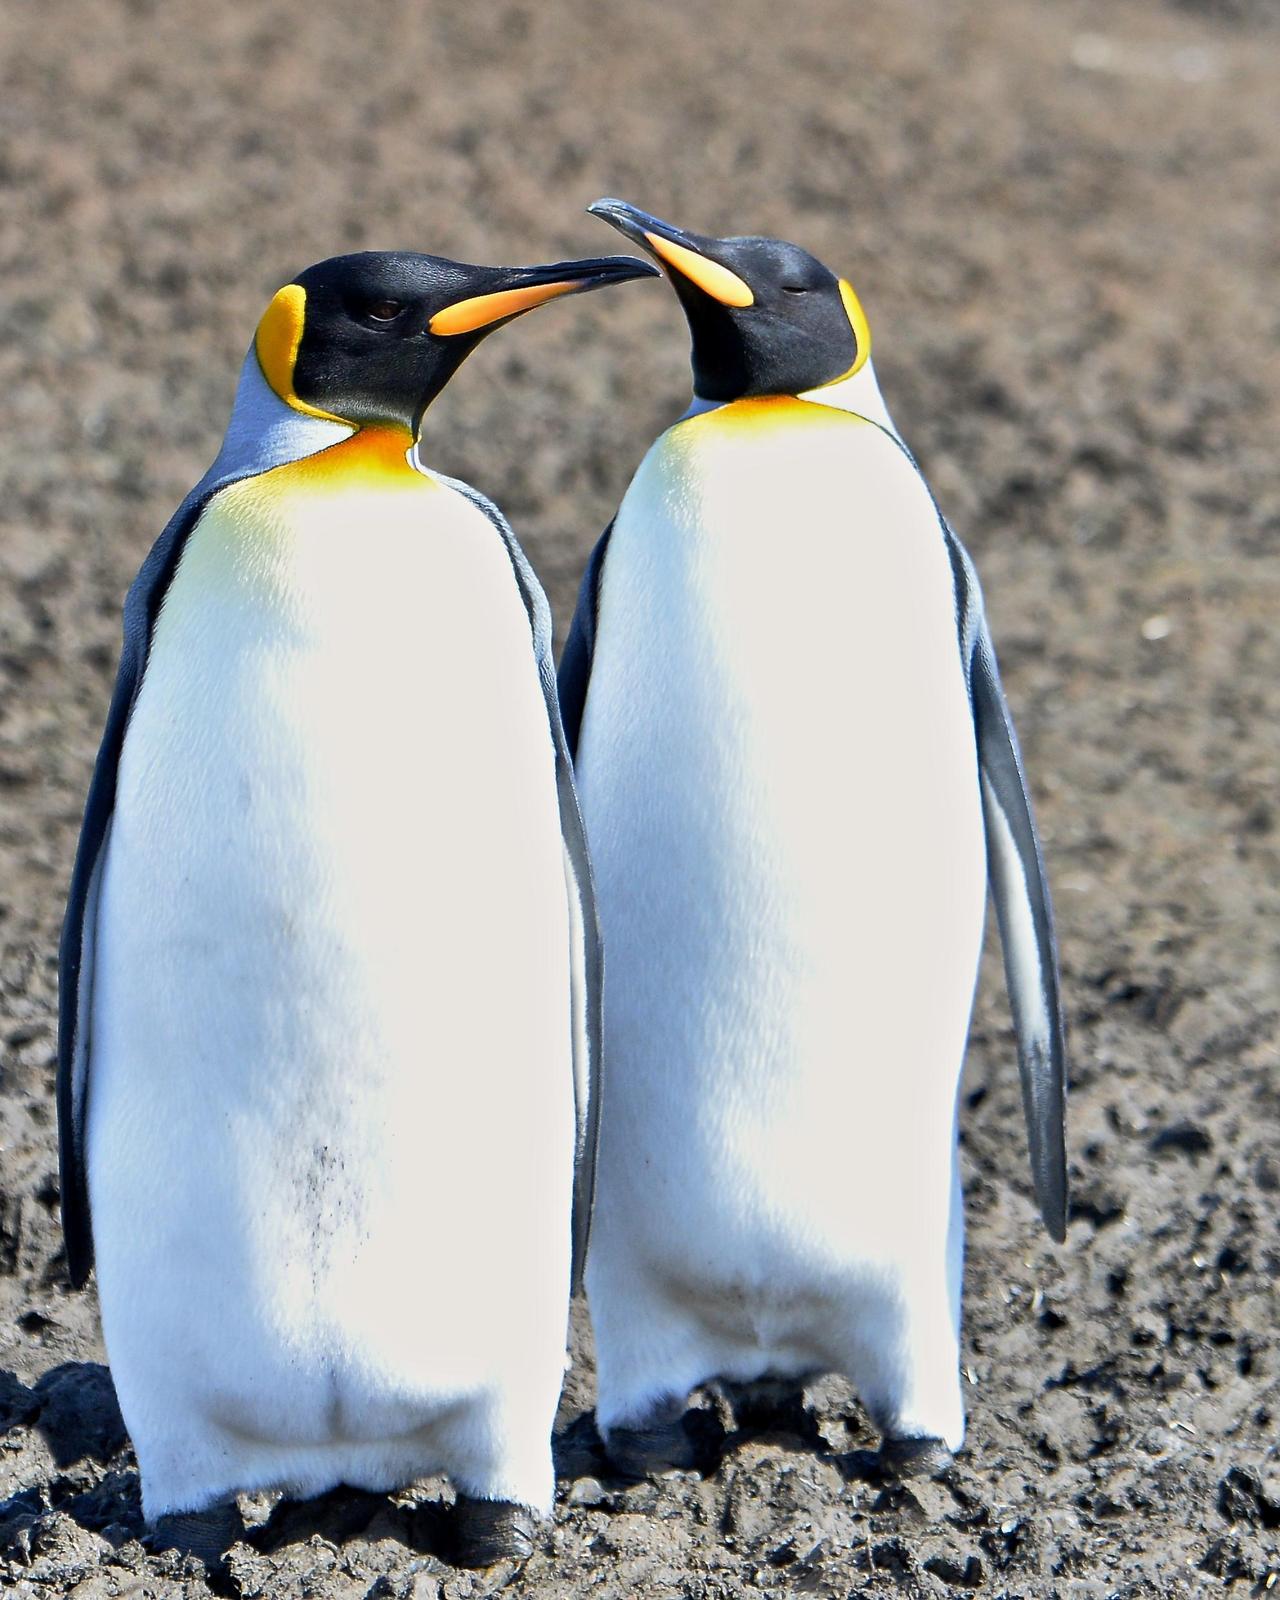 King Penguin Photo by Gerald Friesen